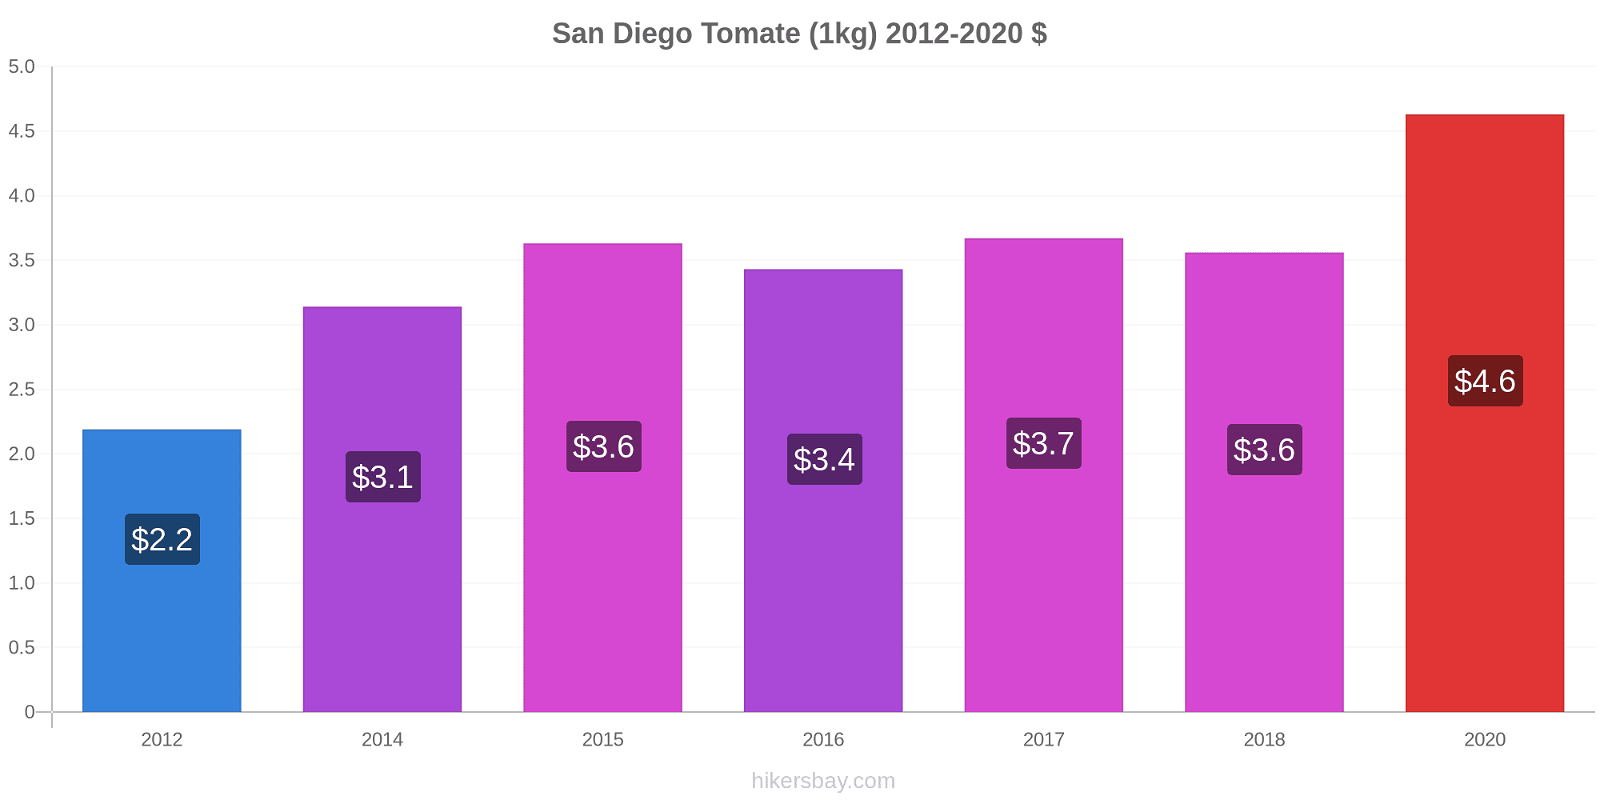 San Diego changements de prix Tomate (1kg) hikersbay.com